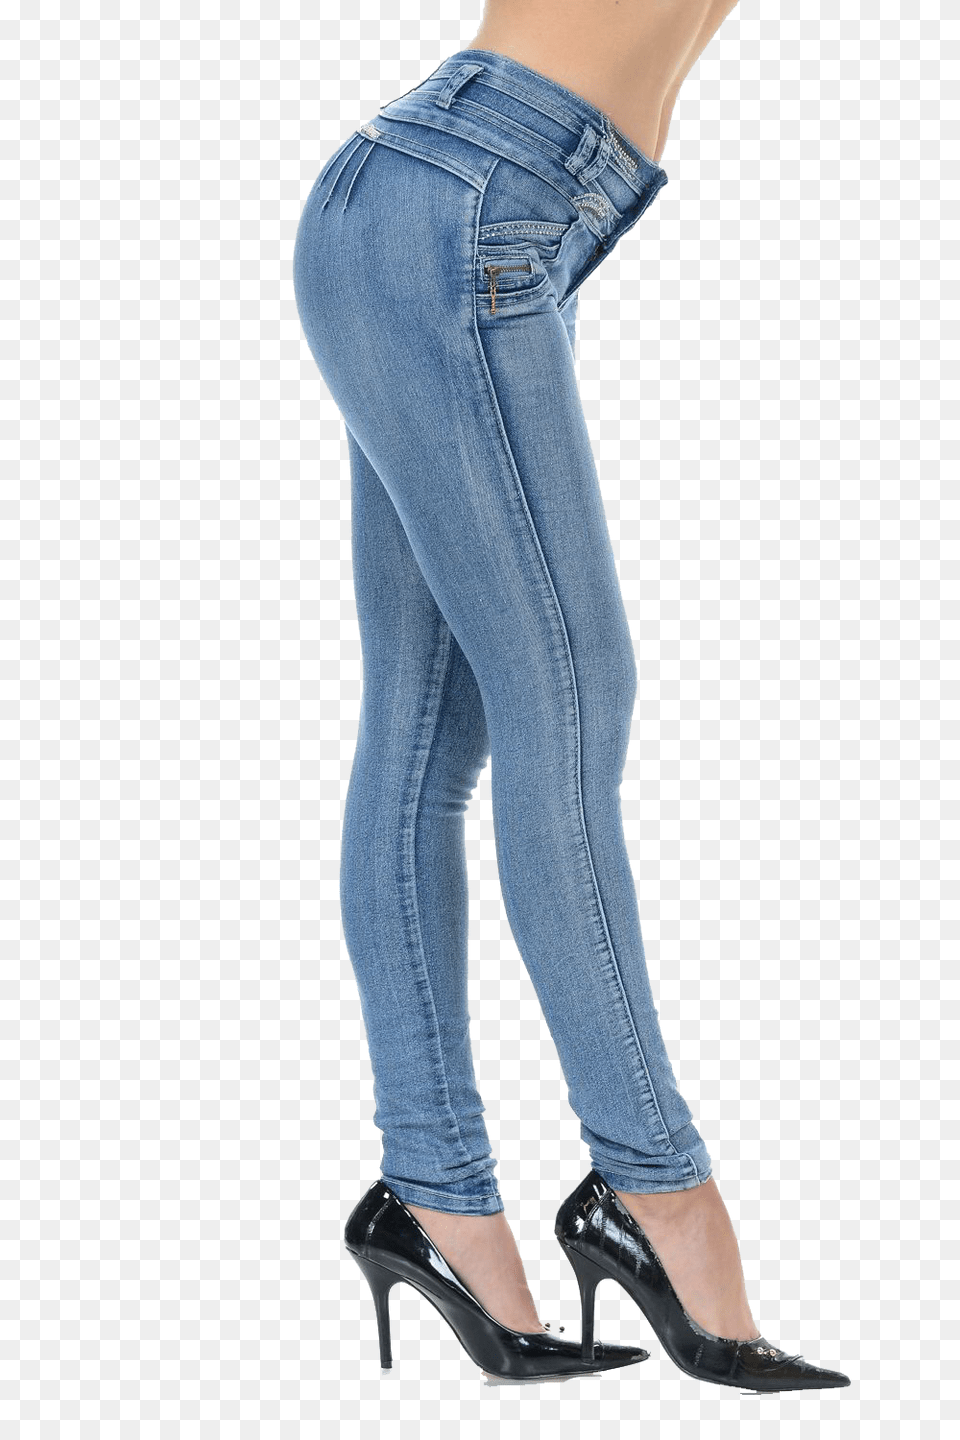 Women Jeans Hd Background, Clothing, Shoe, Footwear, High Heel Png Image